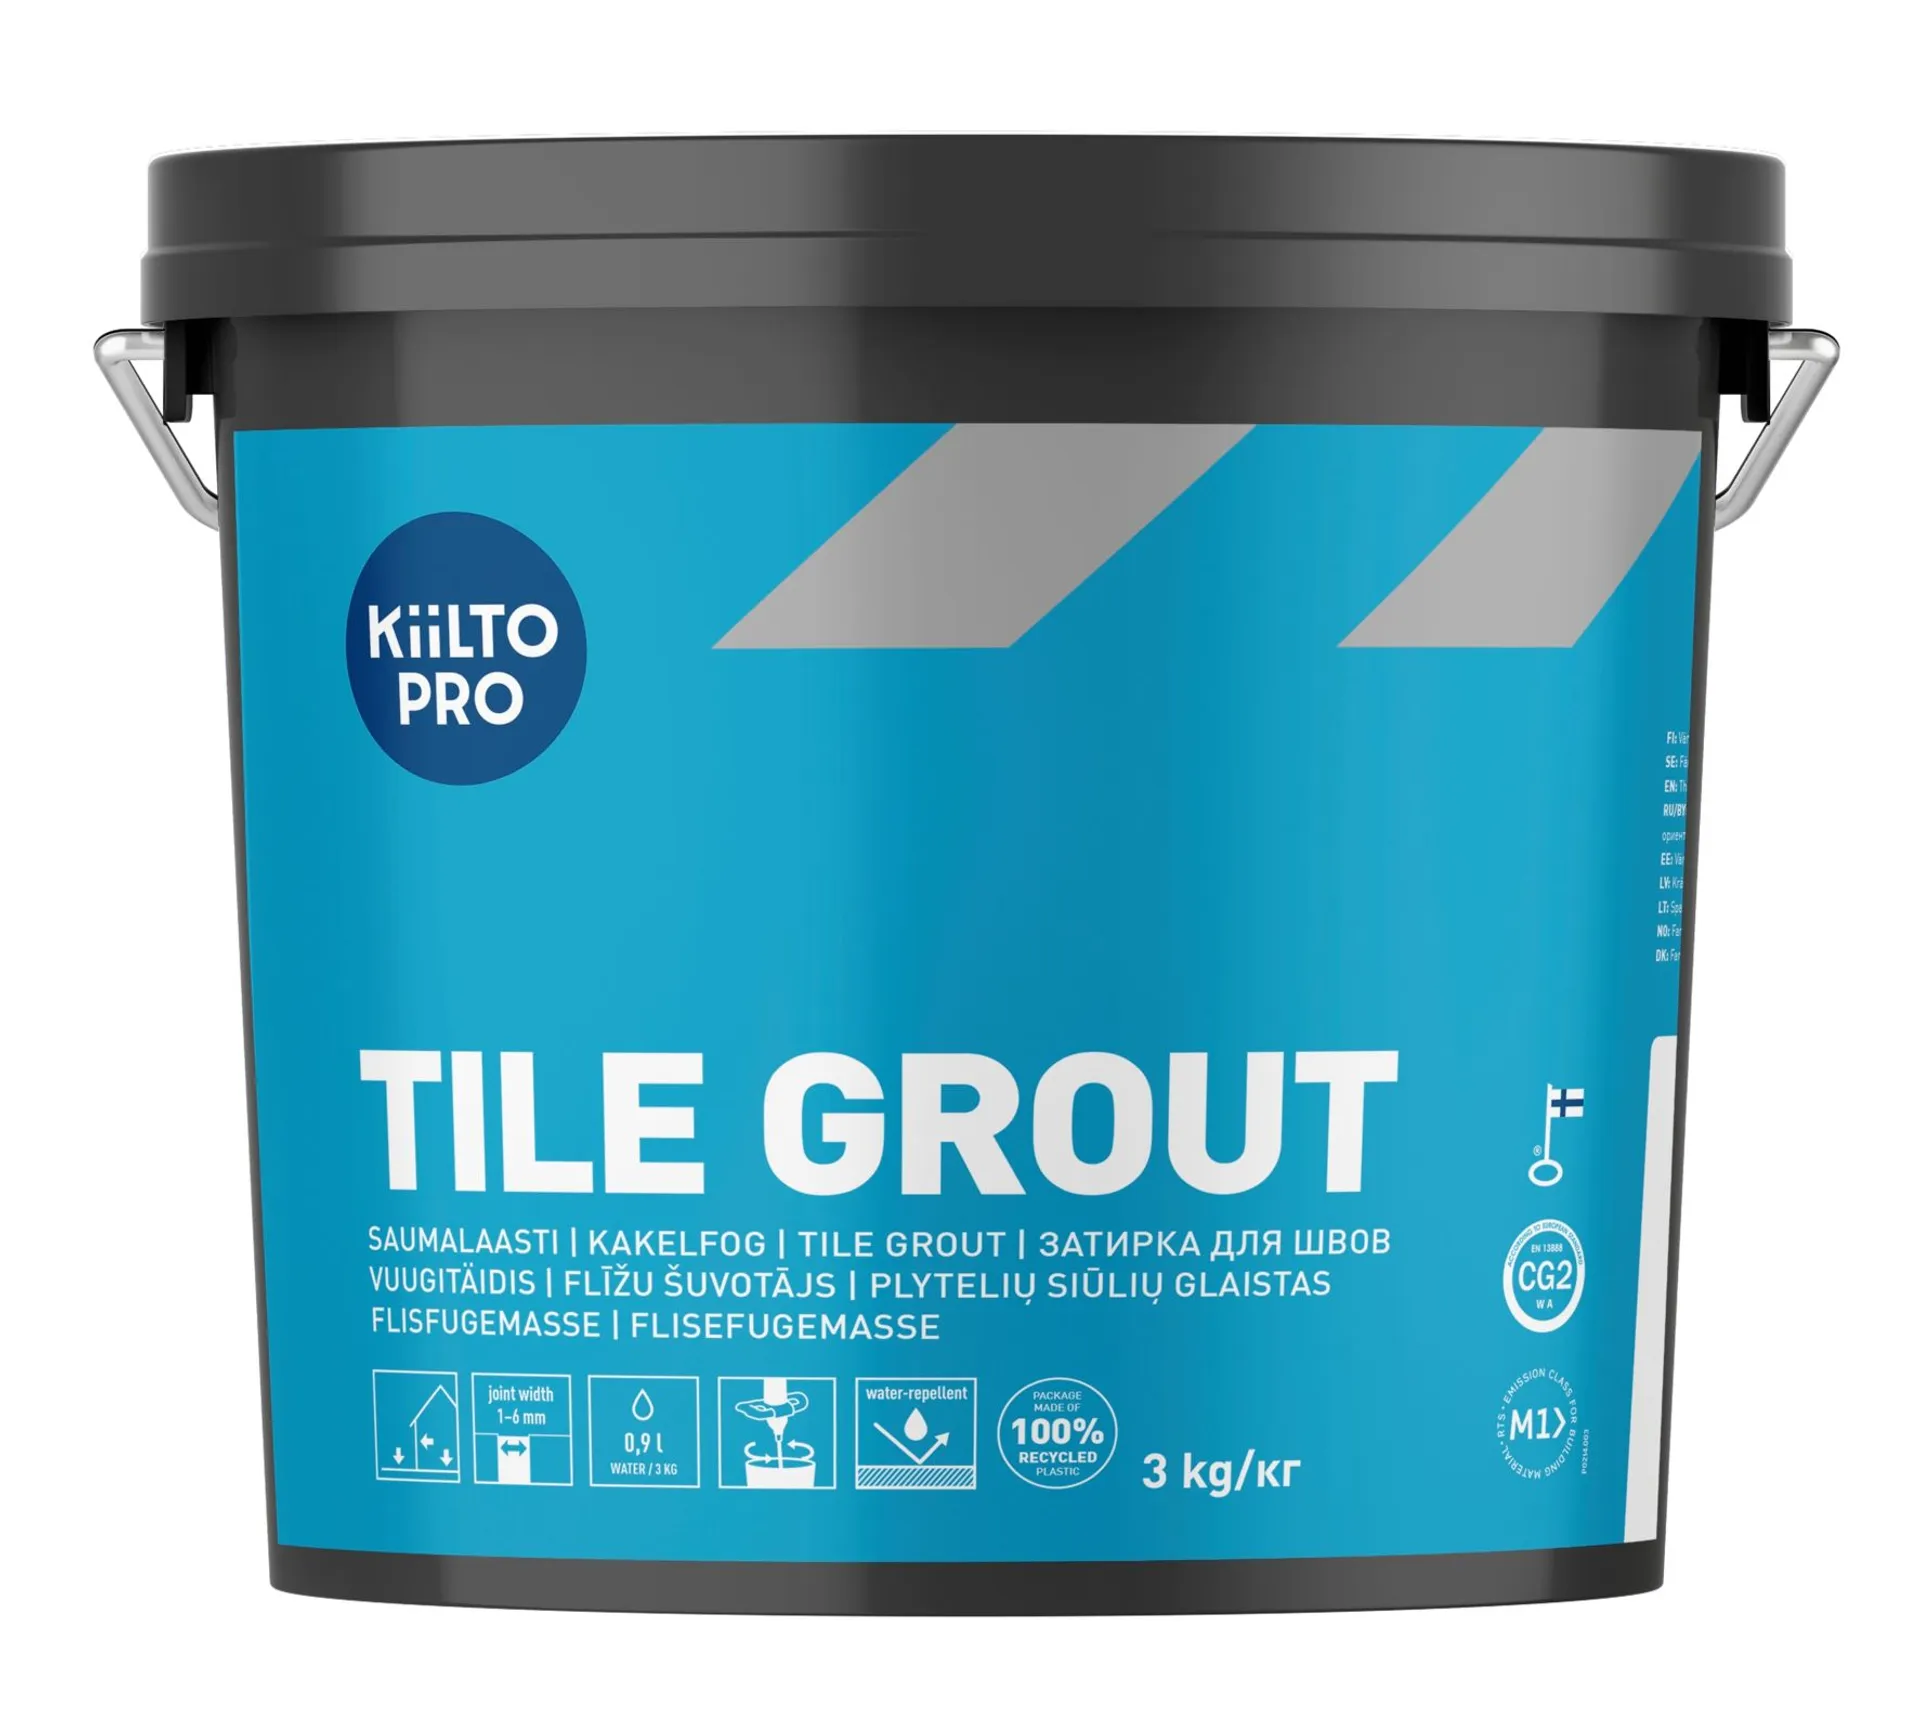 Kiilto Pro Tile grout saumalaasti 41 stone 3 kg